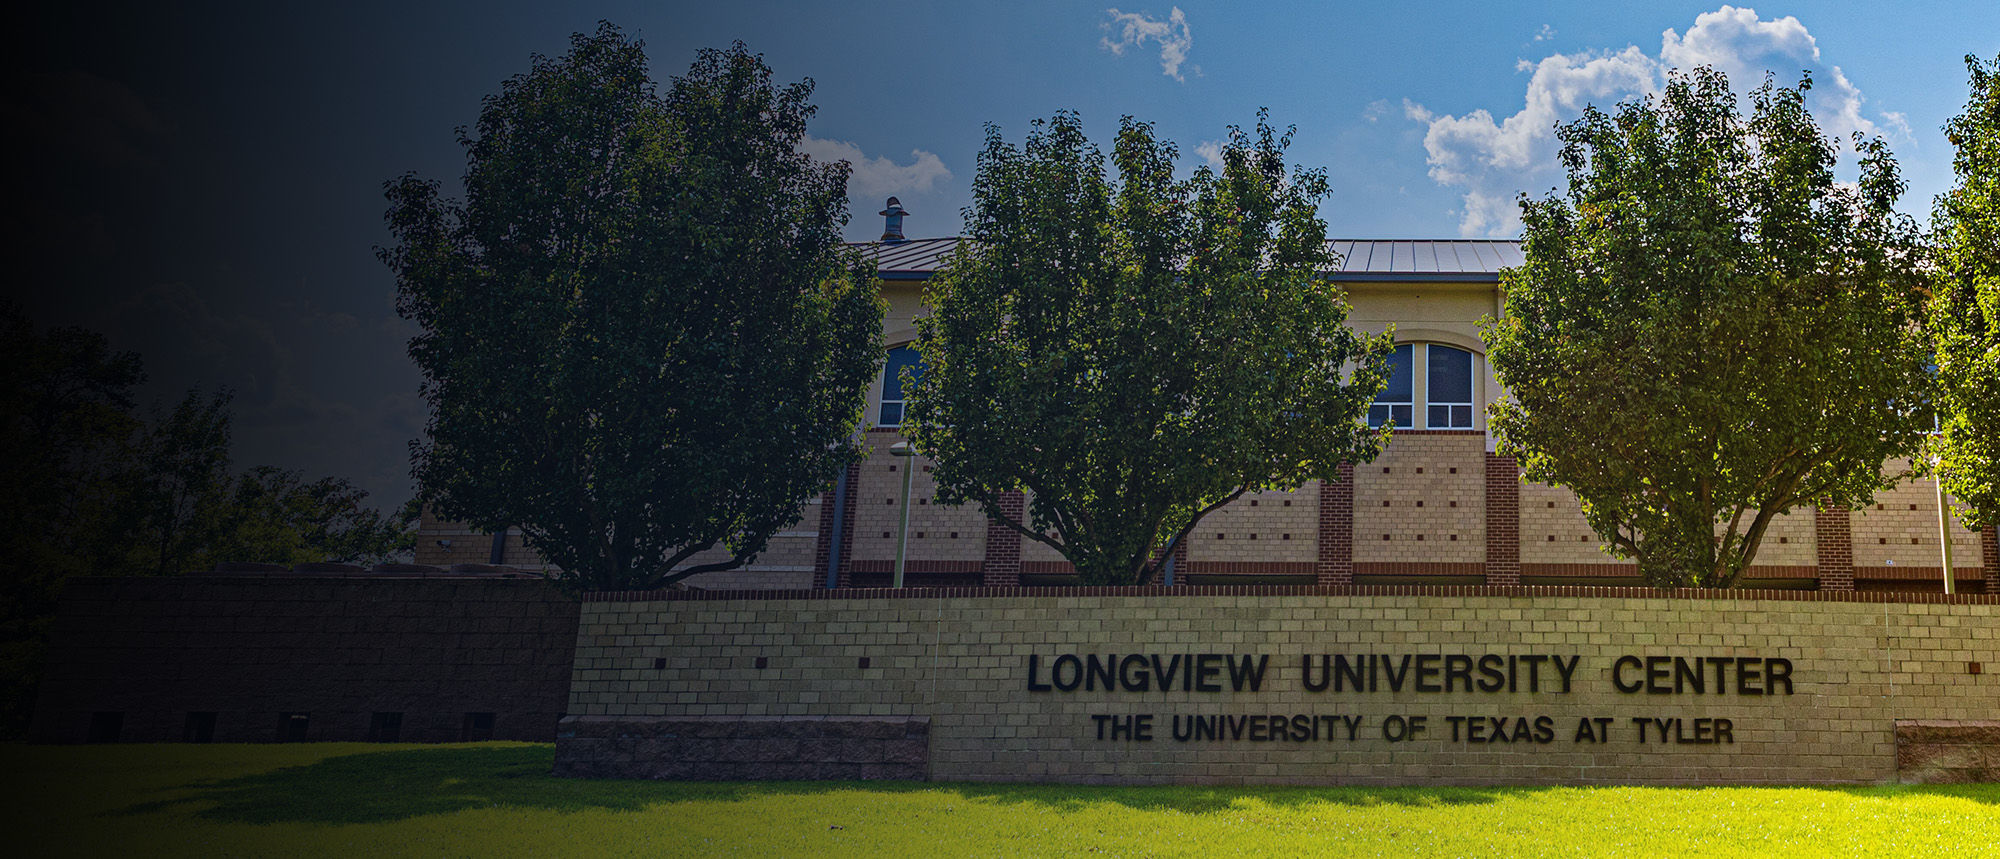 Longview University Center